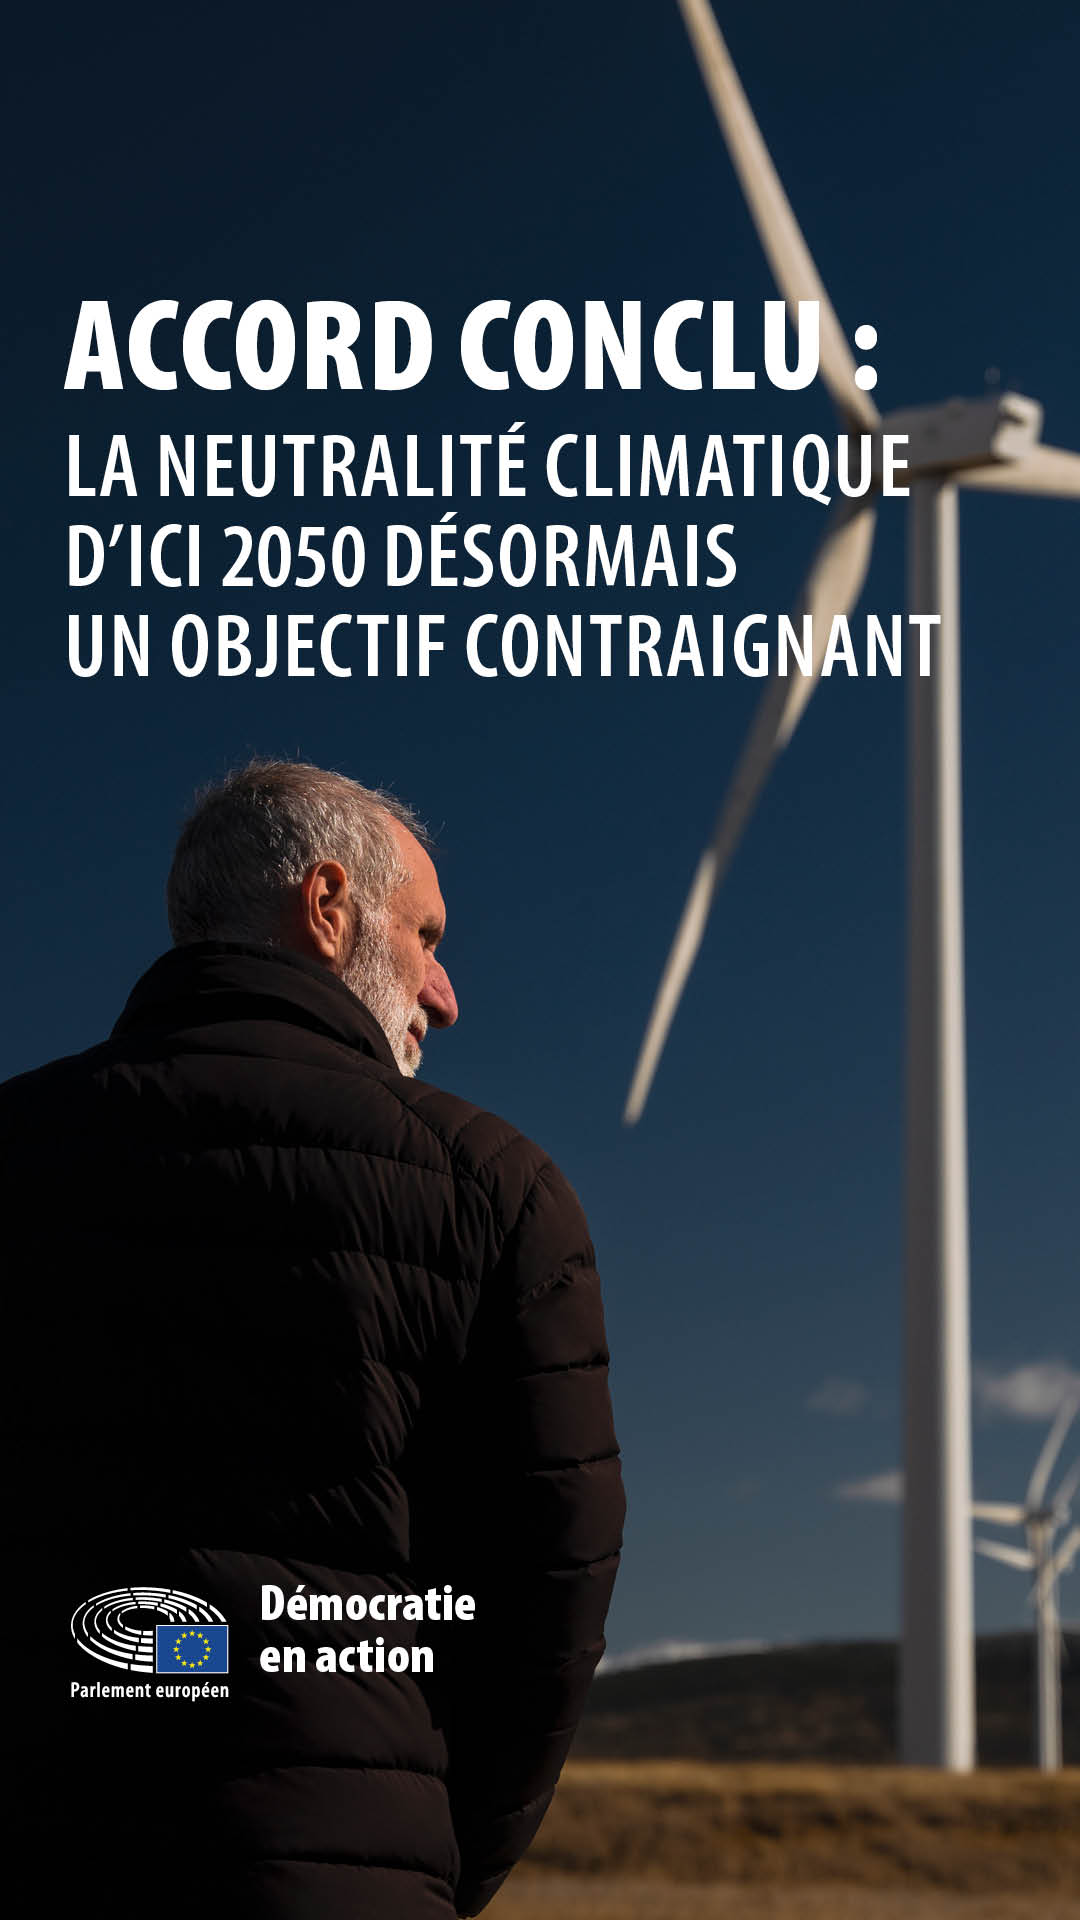 Climate neutrality - Story